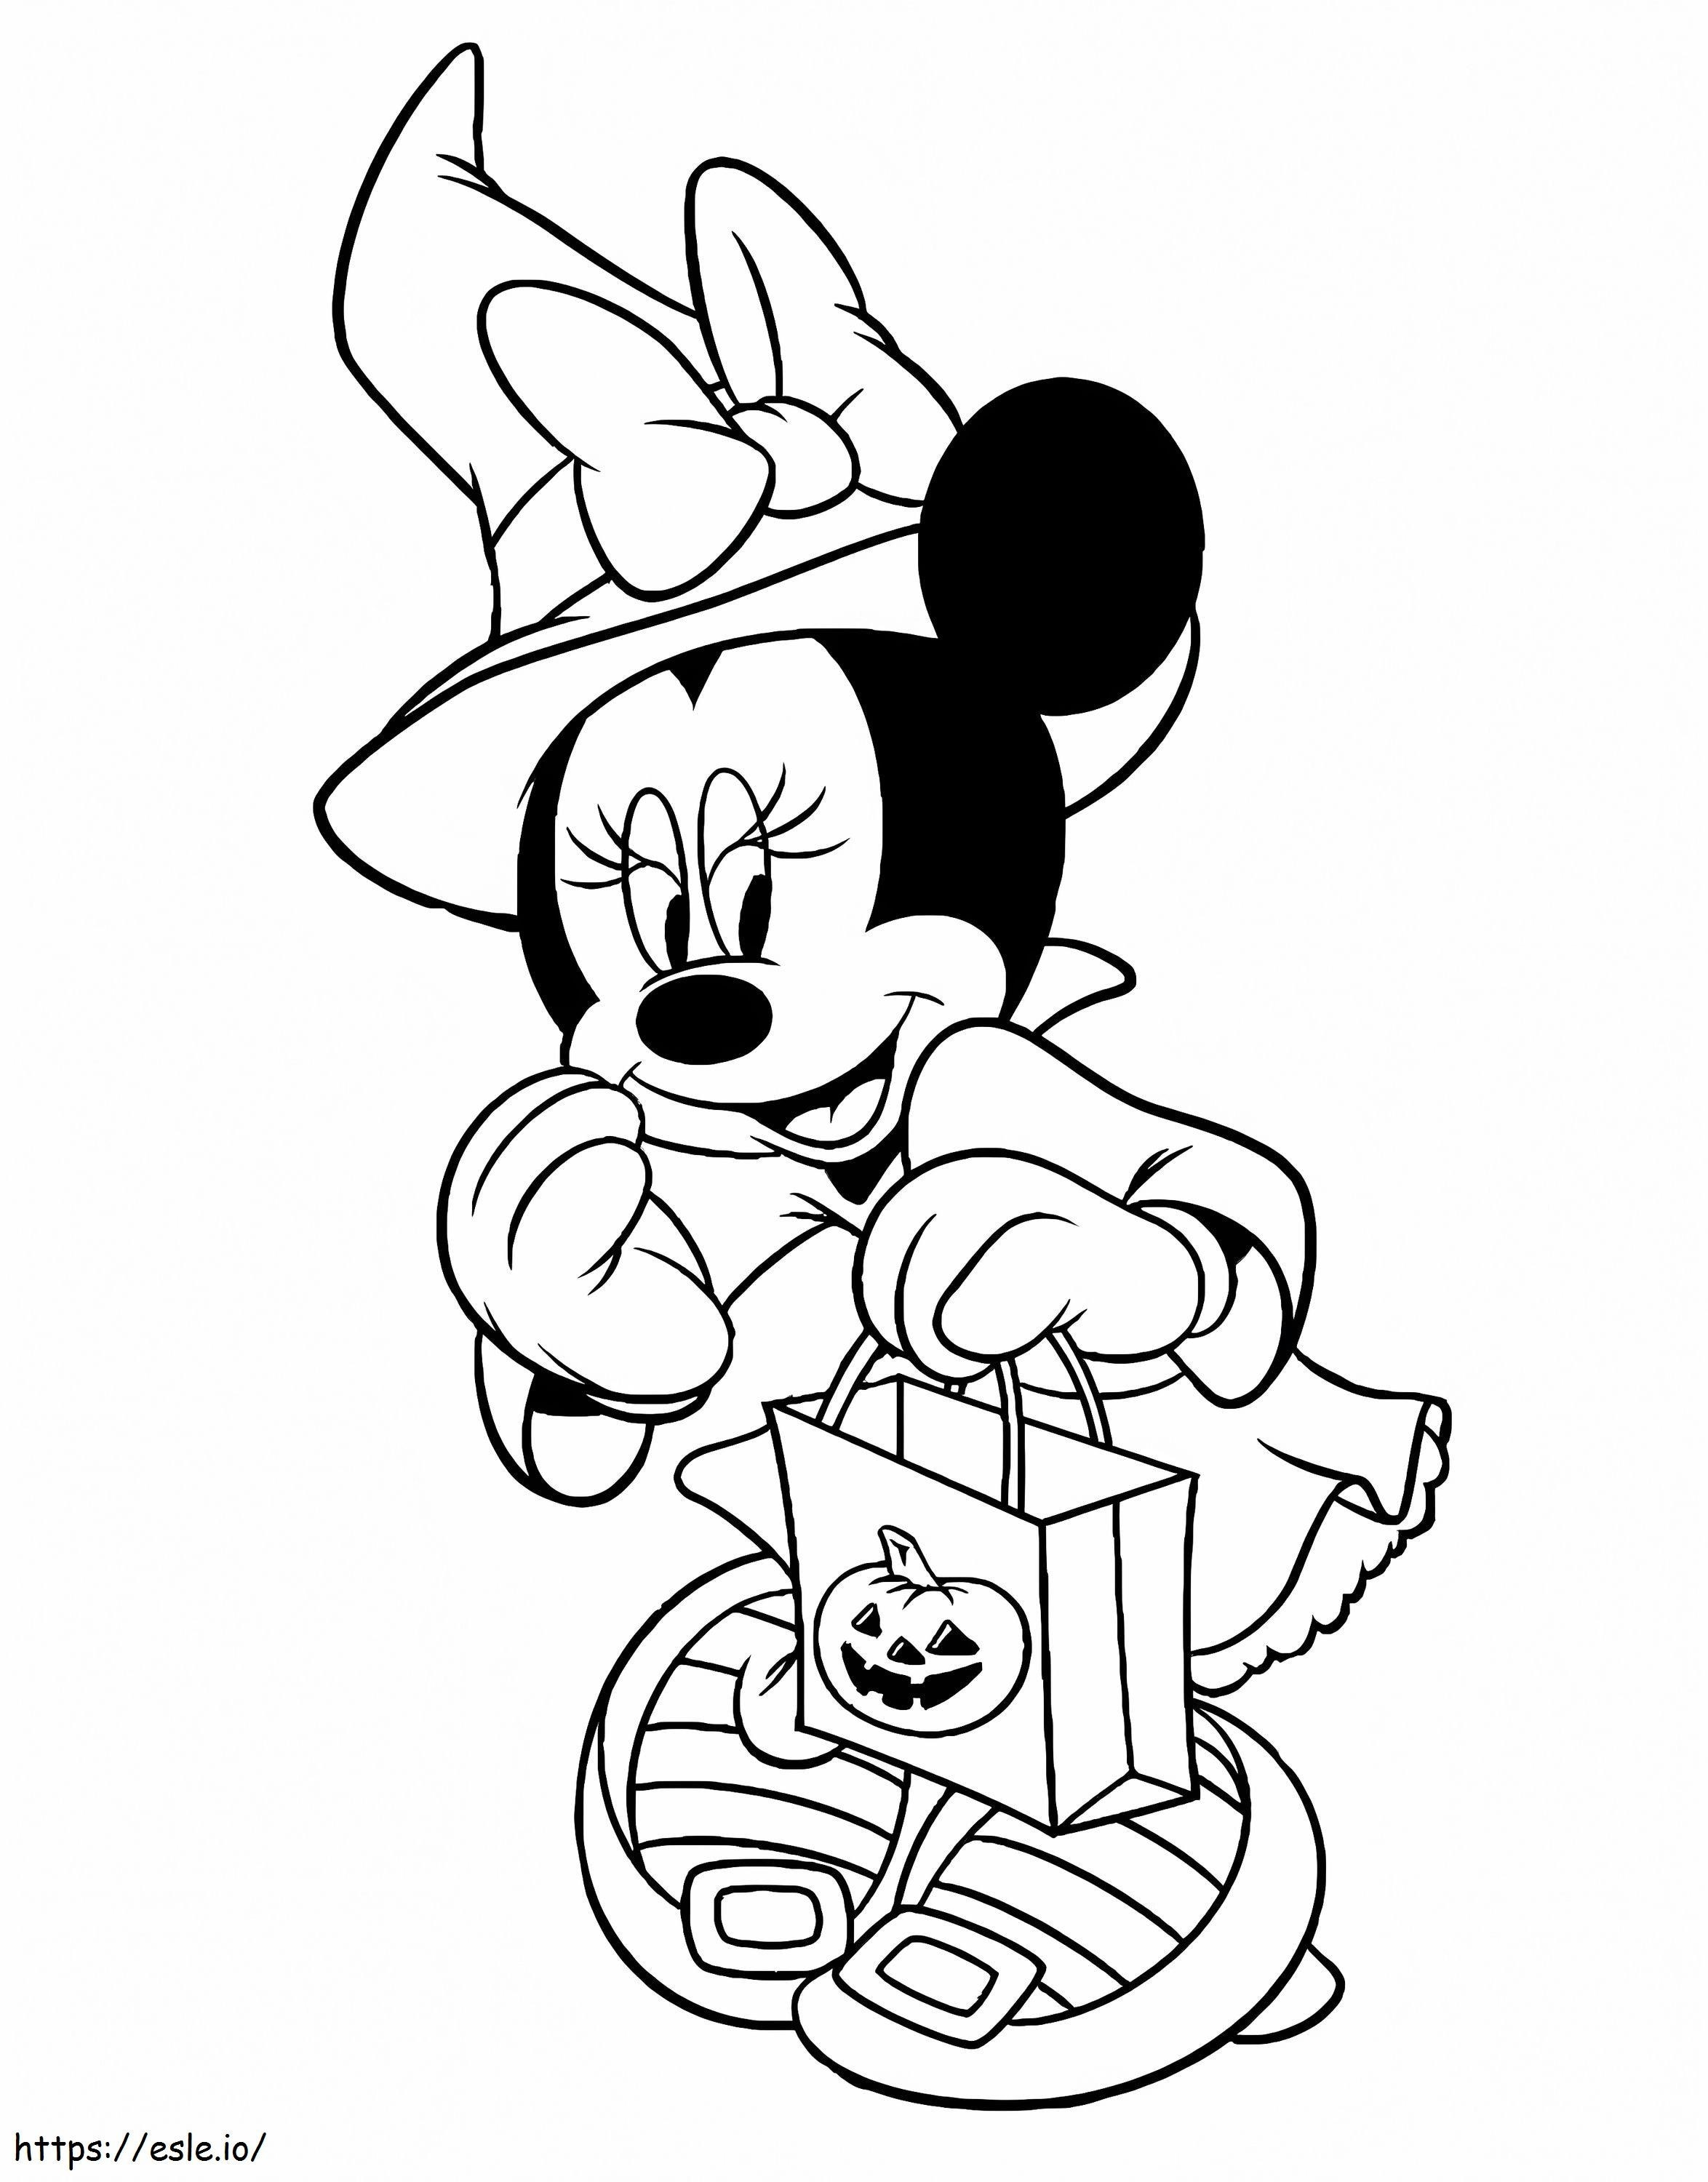 Minnie Mouse con sombrero de bruja en Halloween para colorear